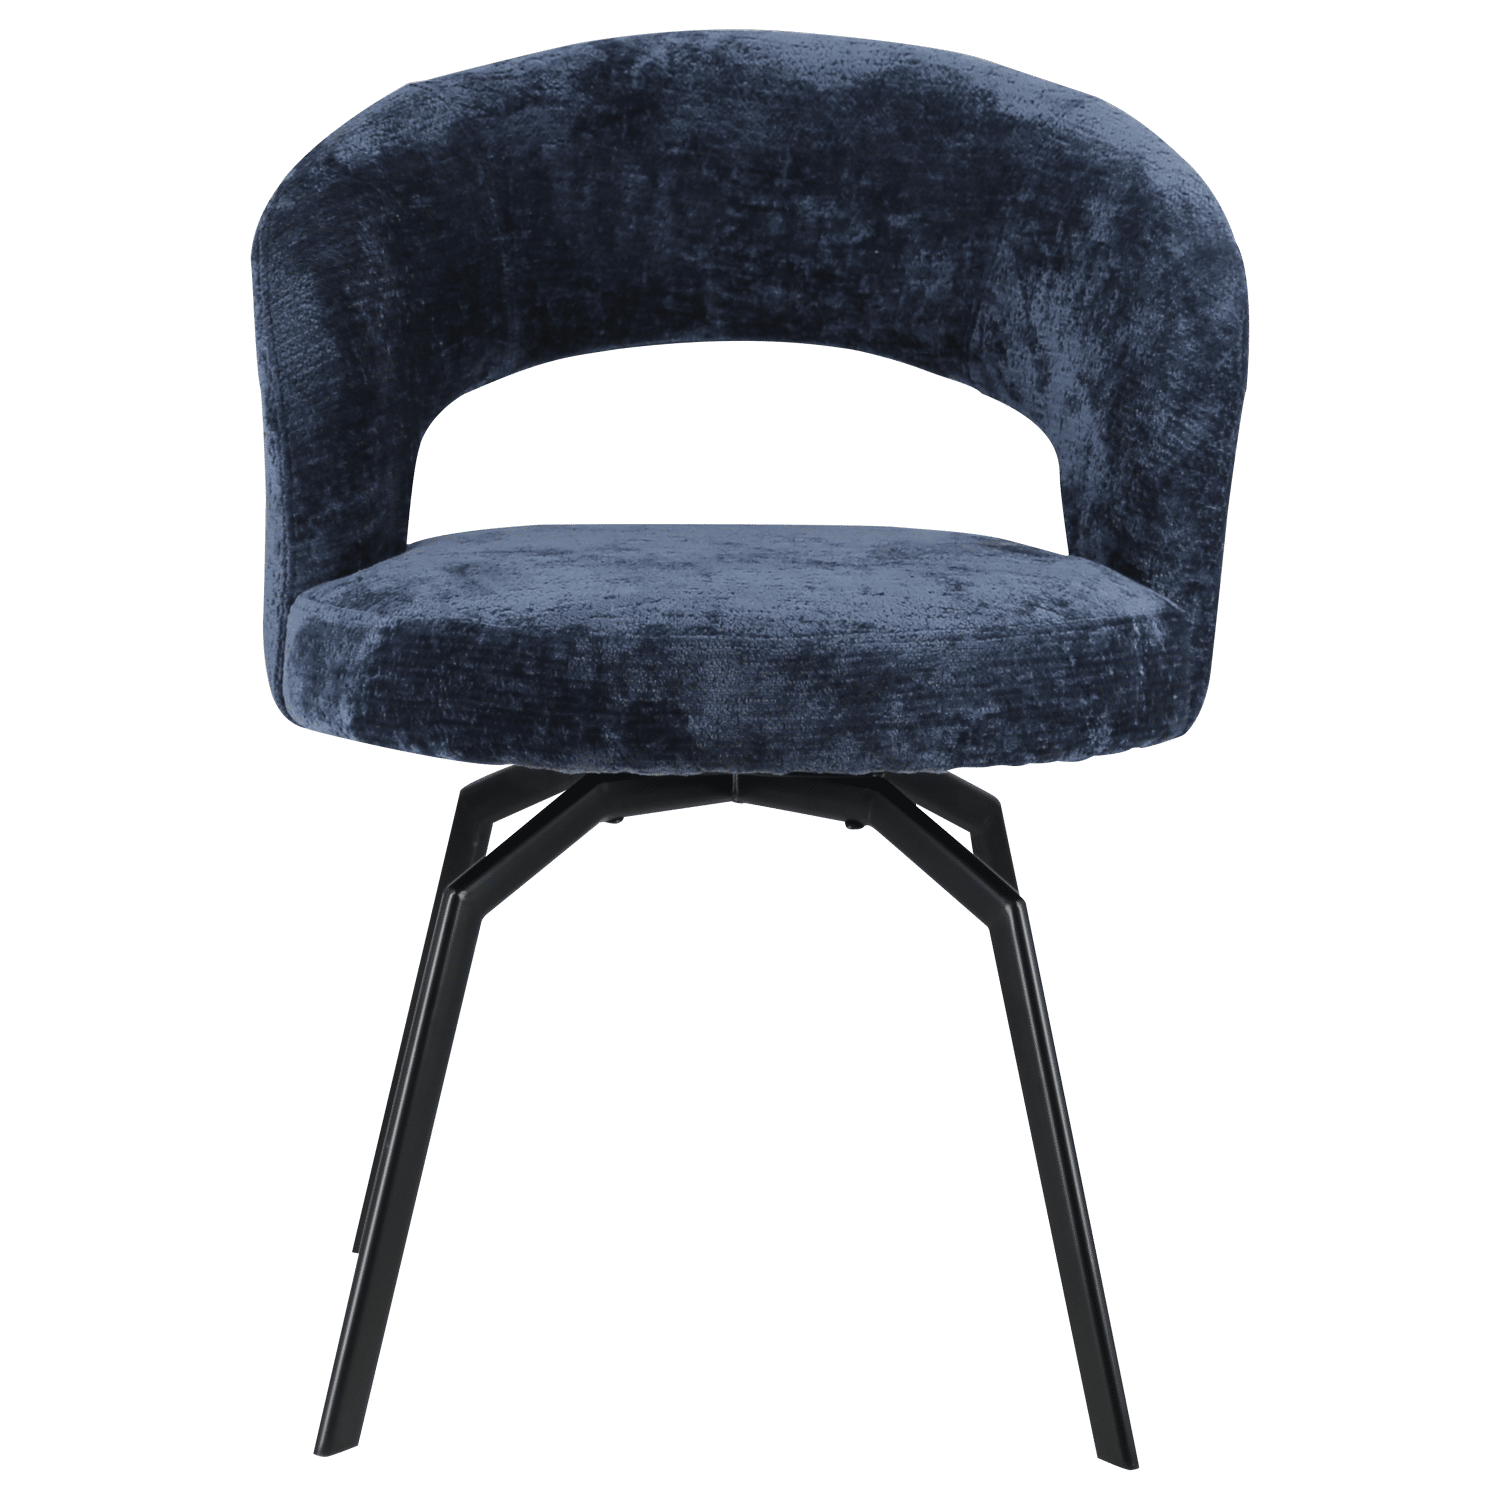 Chaise en chenille bleu foncé EHBA